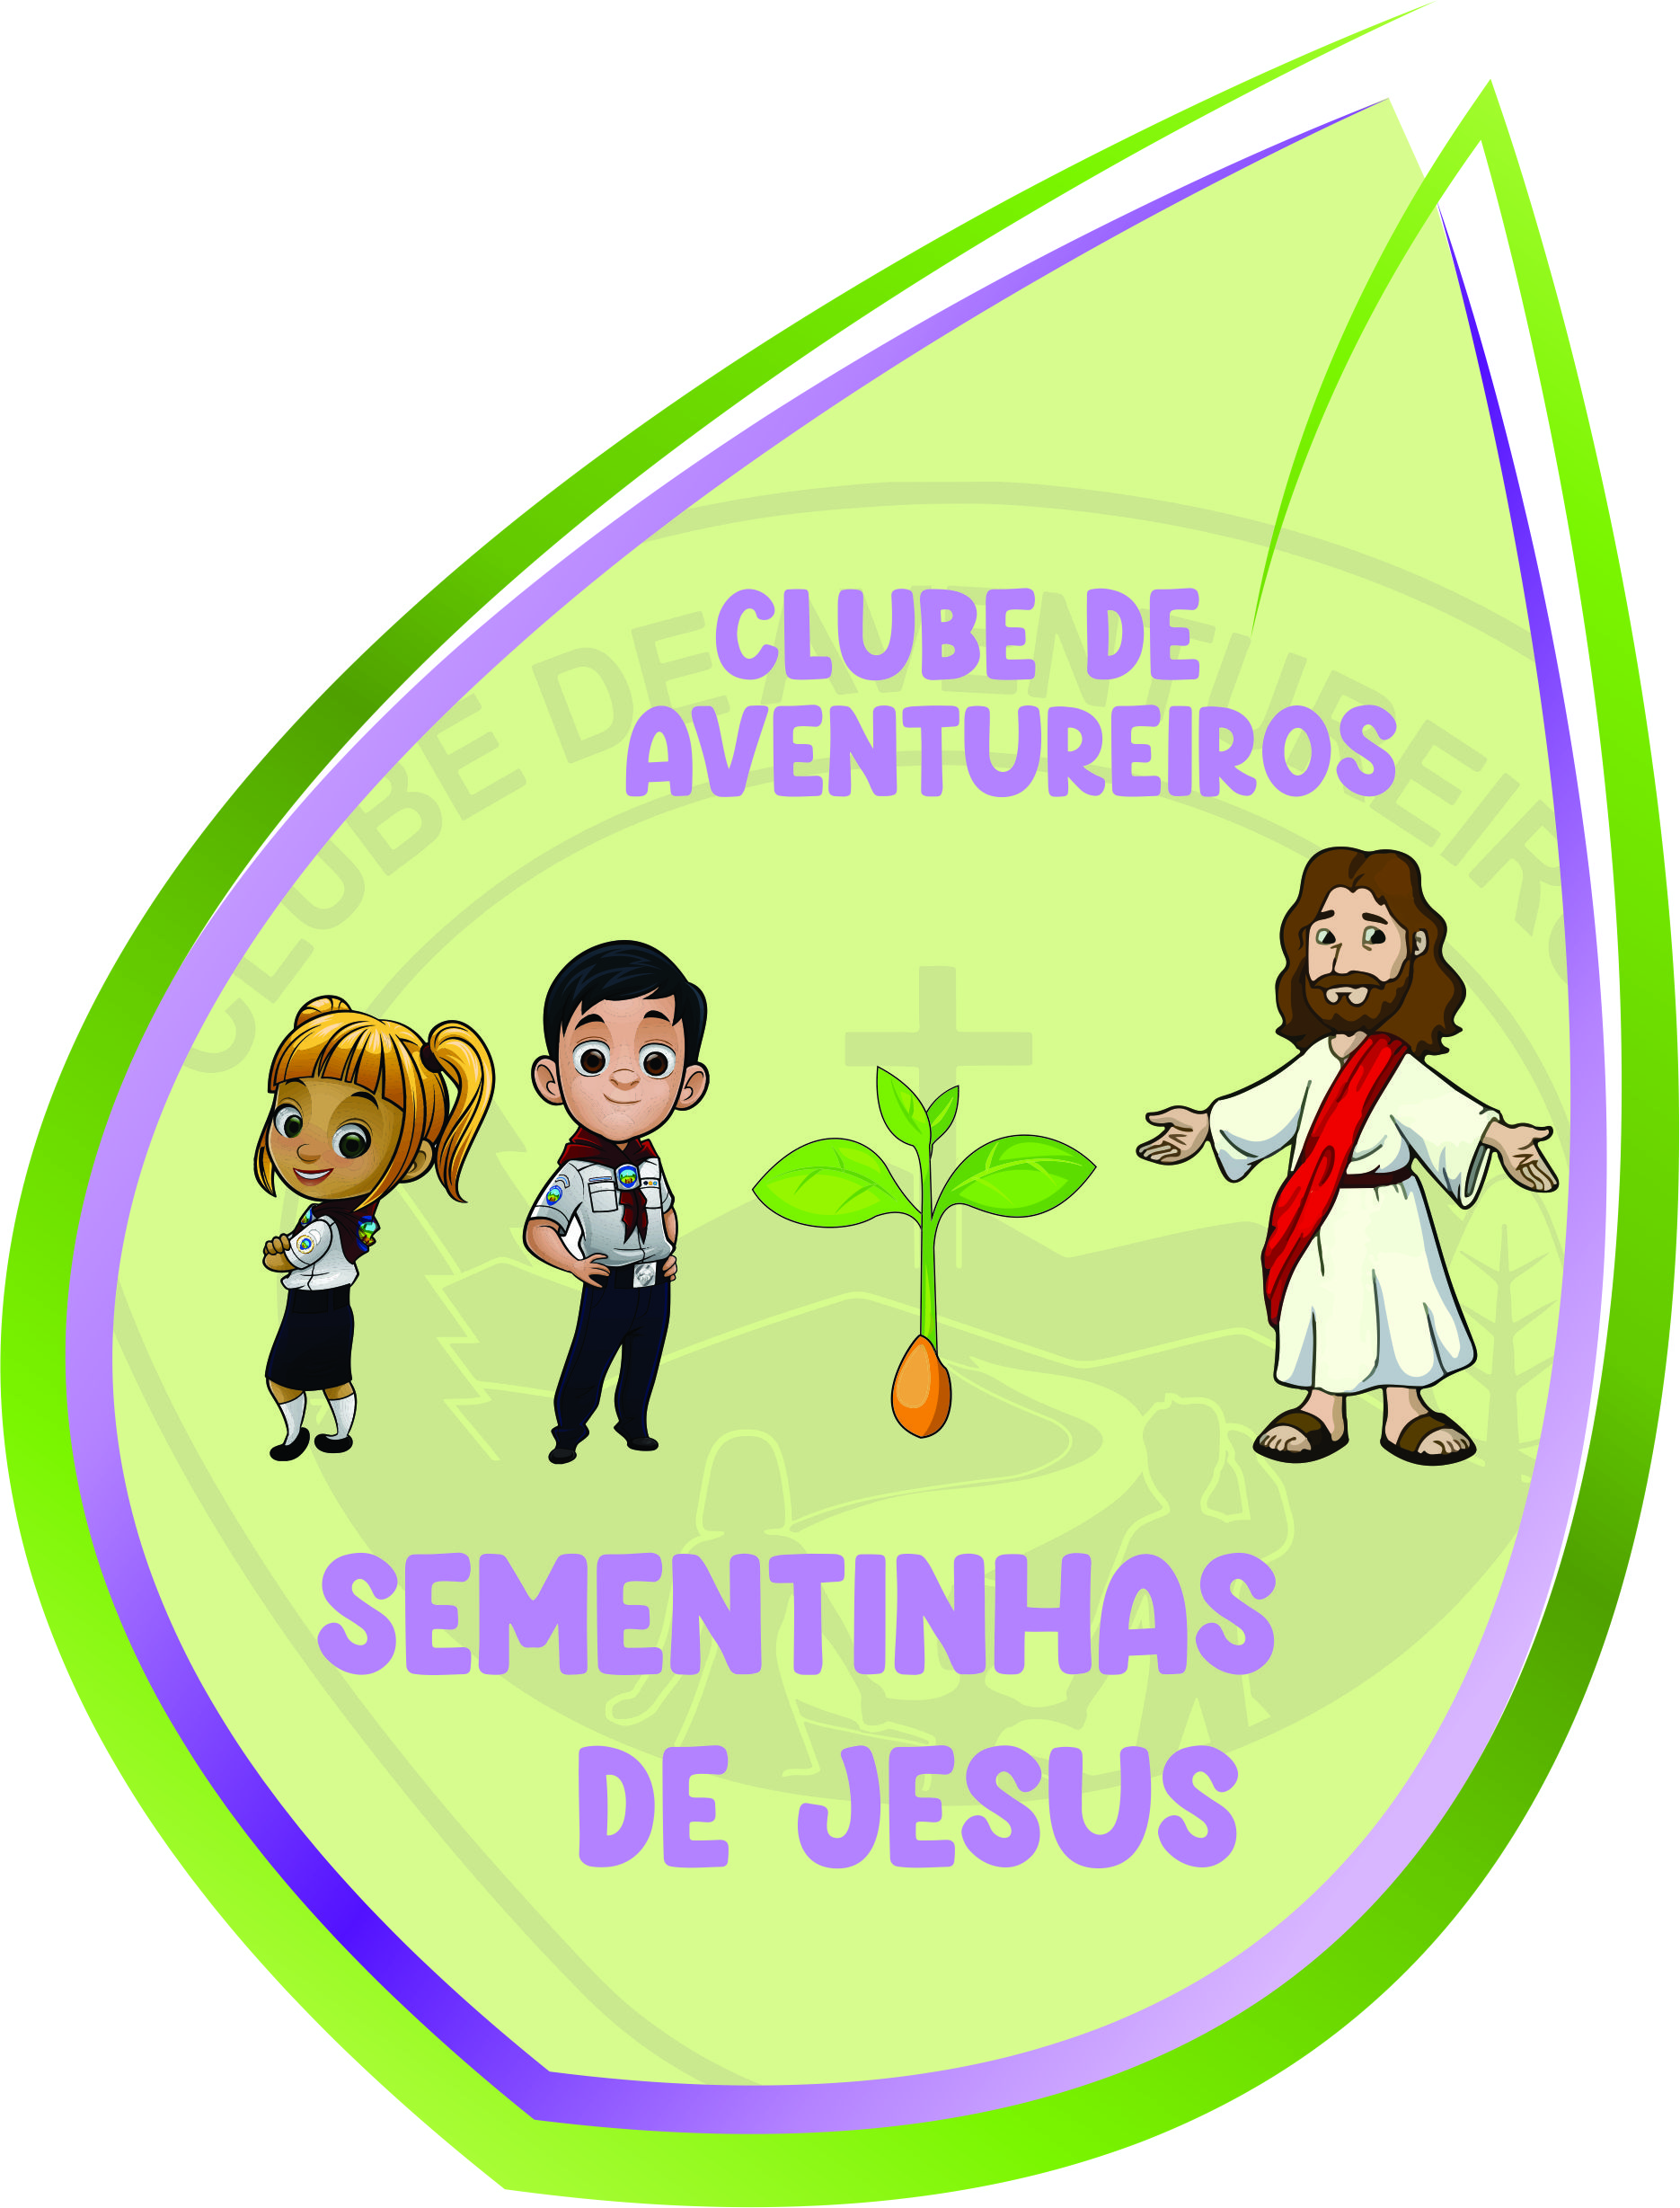 SEMENTINHAS DE JESUS